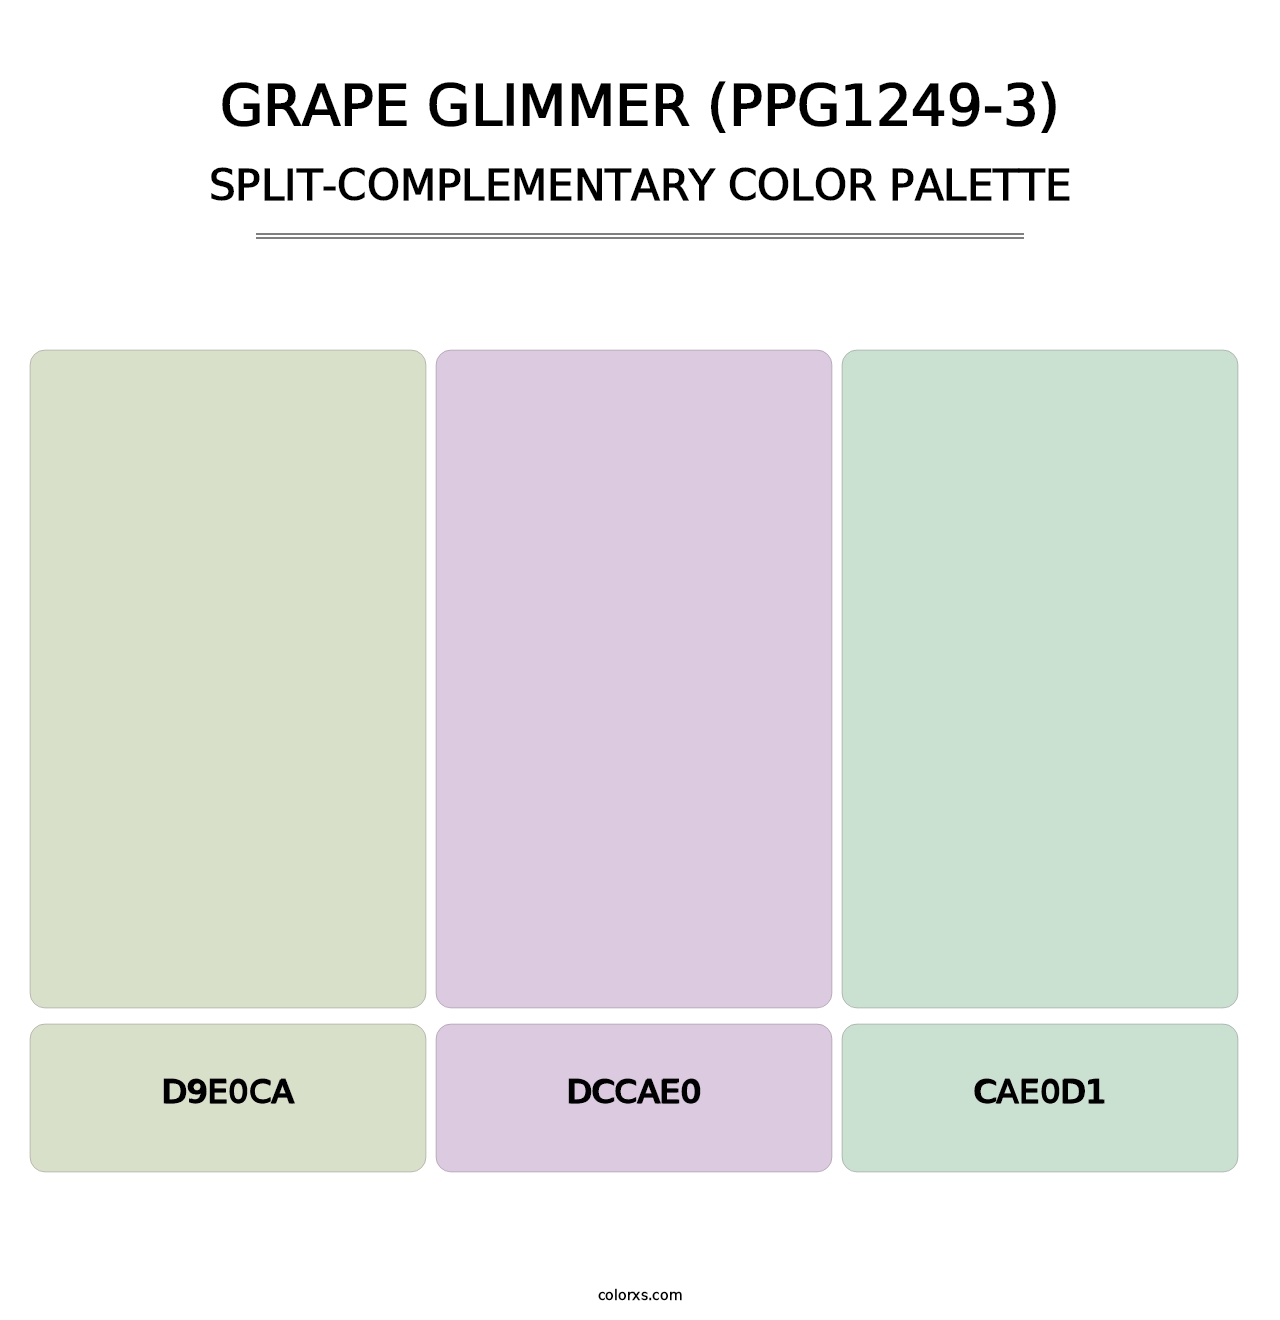 Grape Glimmer (PPG1249-3) - Split-Complementary Color Palette